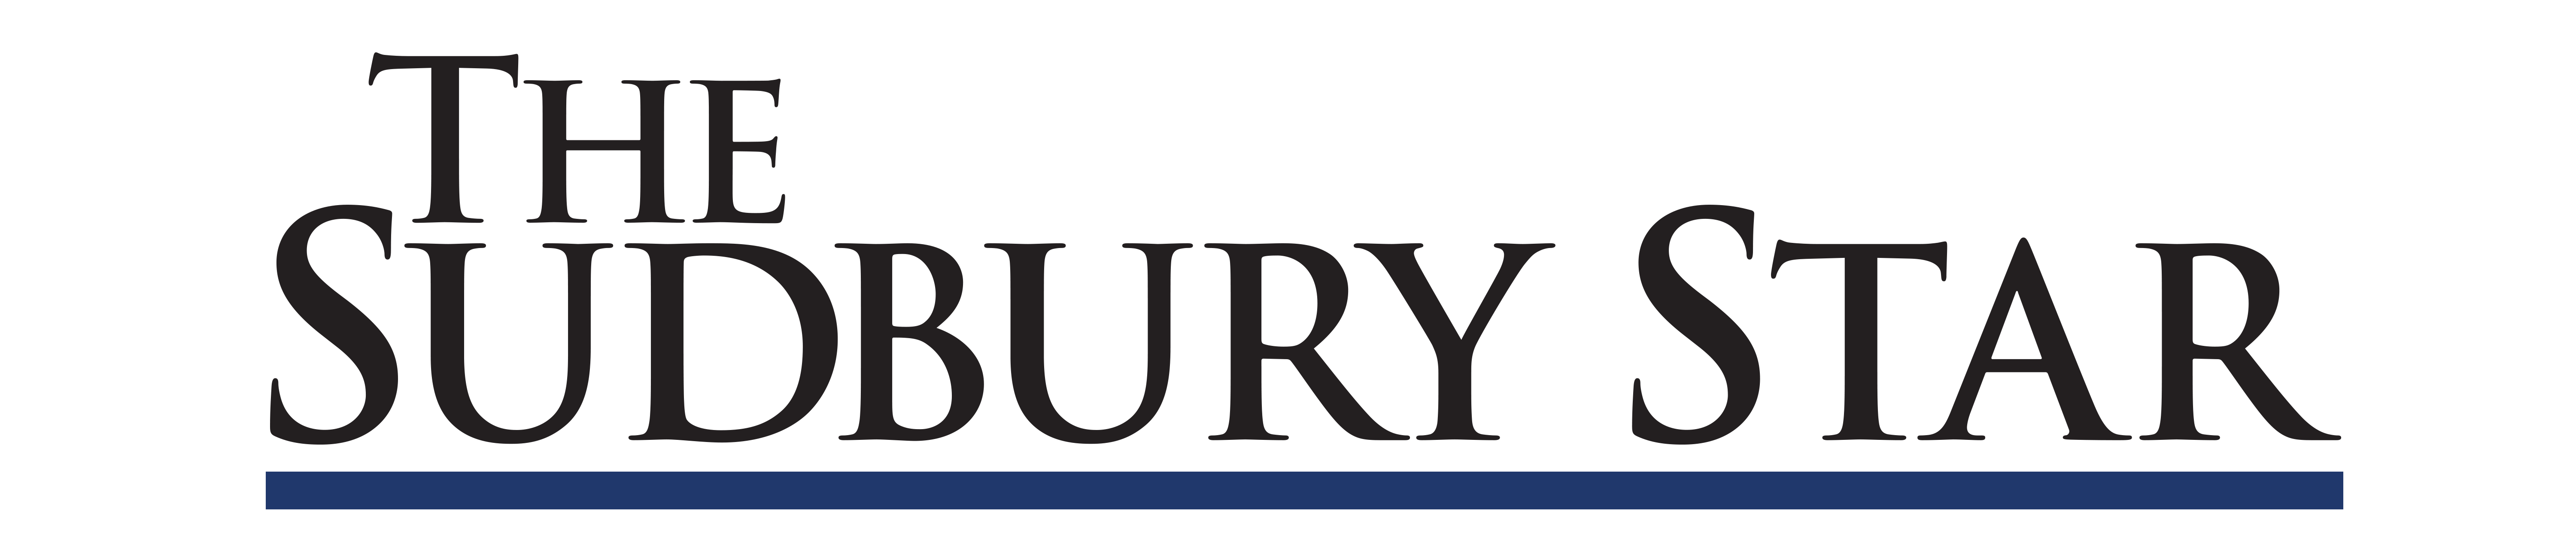 The Sudbury Star - Affordable Graphic Design, Logo Design, Print Design